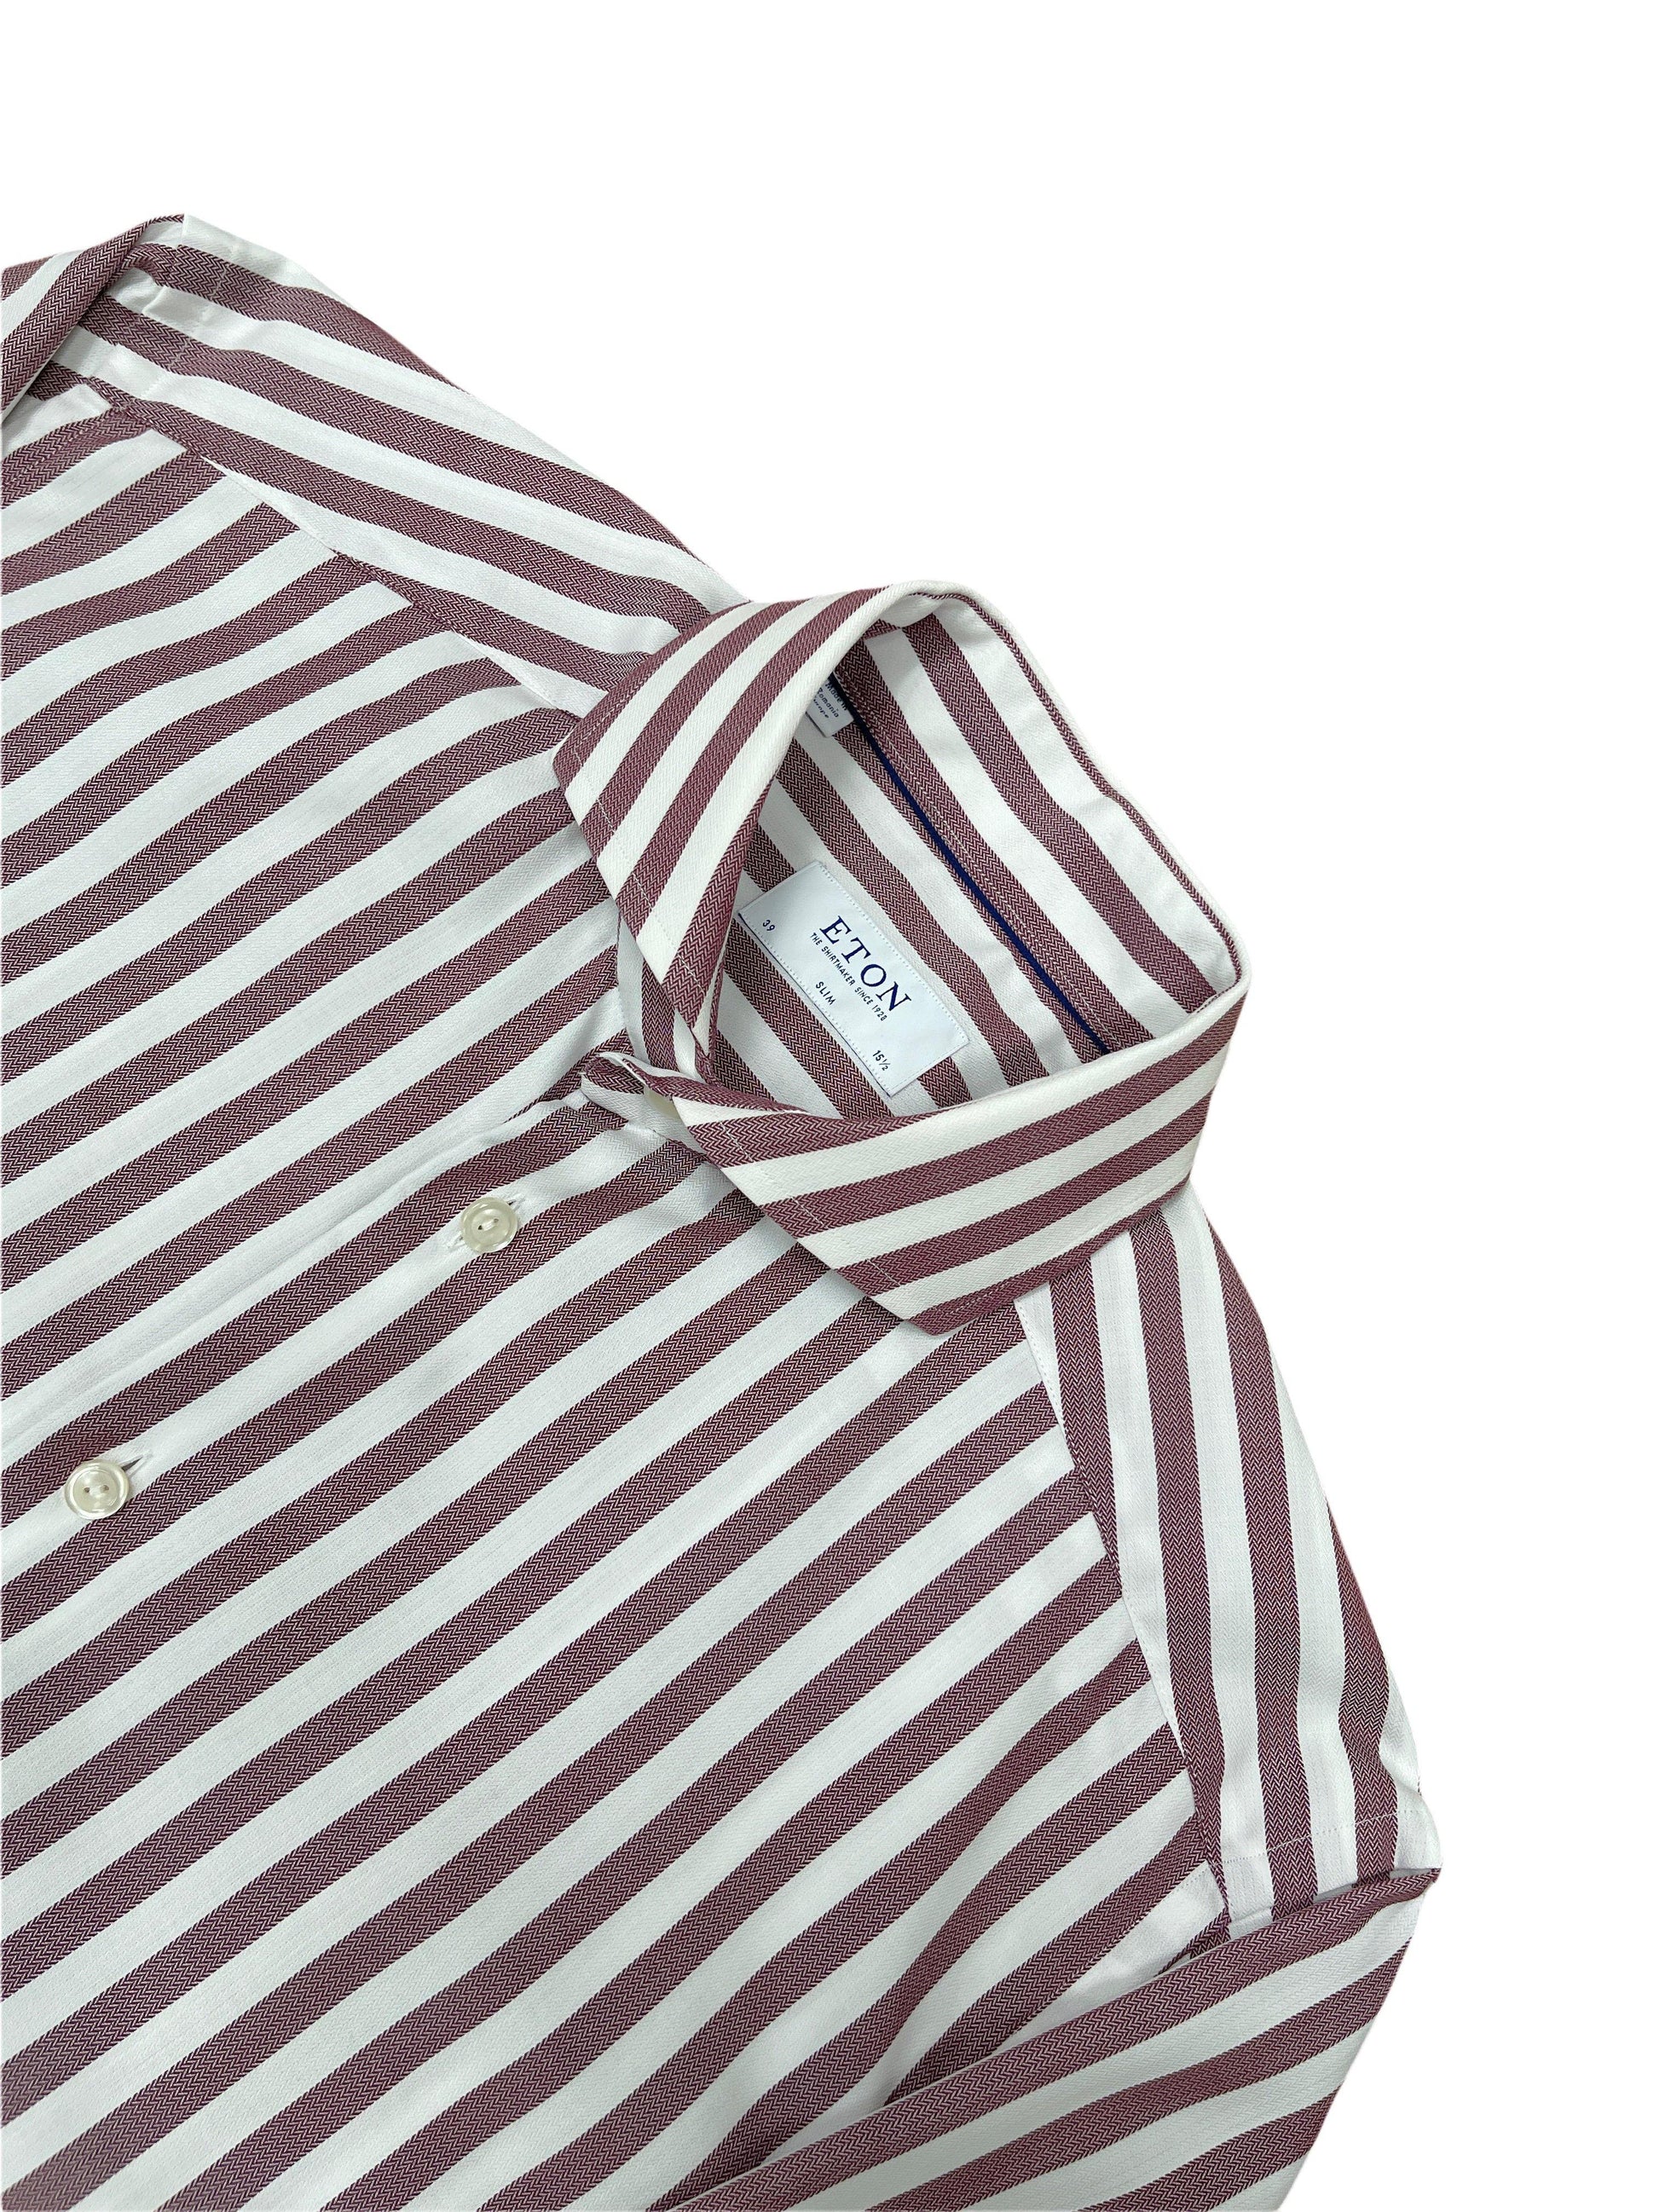 ETON Burgundy Striped Dress Shirt 15.5 / 39 - Medium  Genuine Design luxury consignment